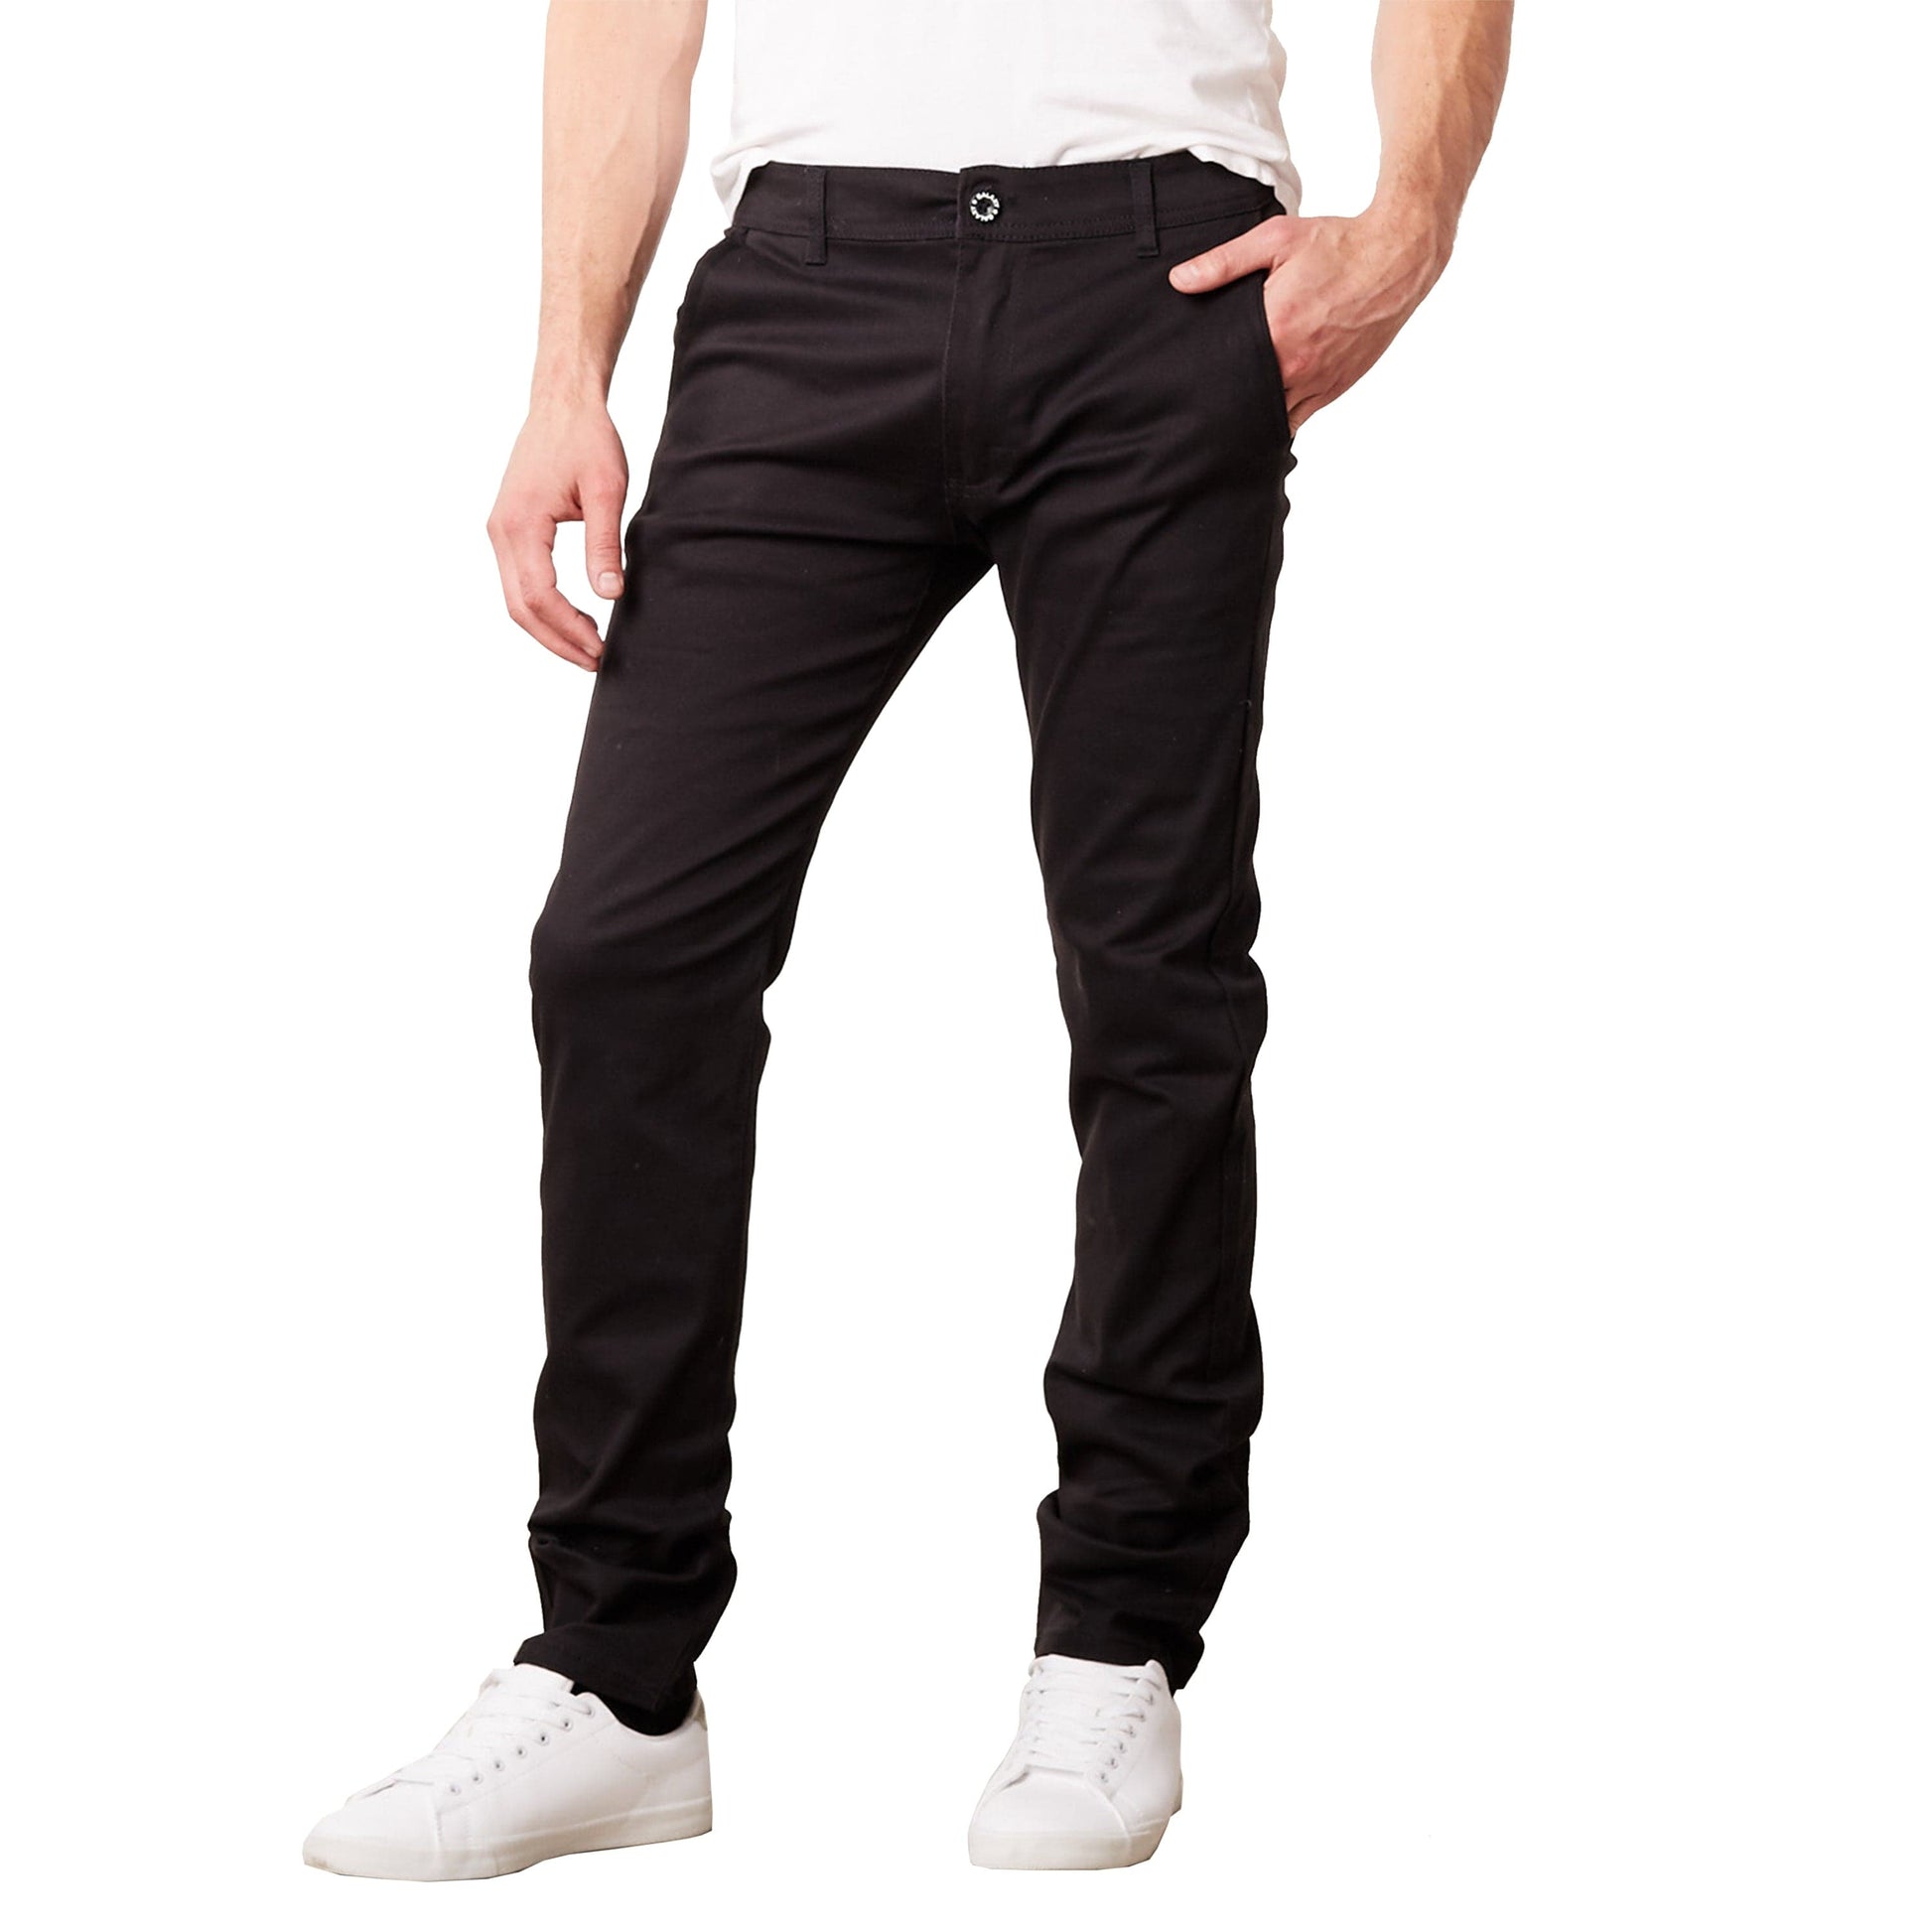 Men's 3-Pack Flex Stretch Slim Straight Jeans with 5 Pocket (Sizes